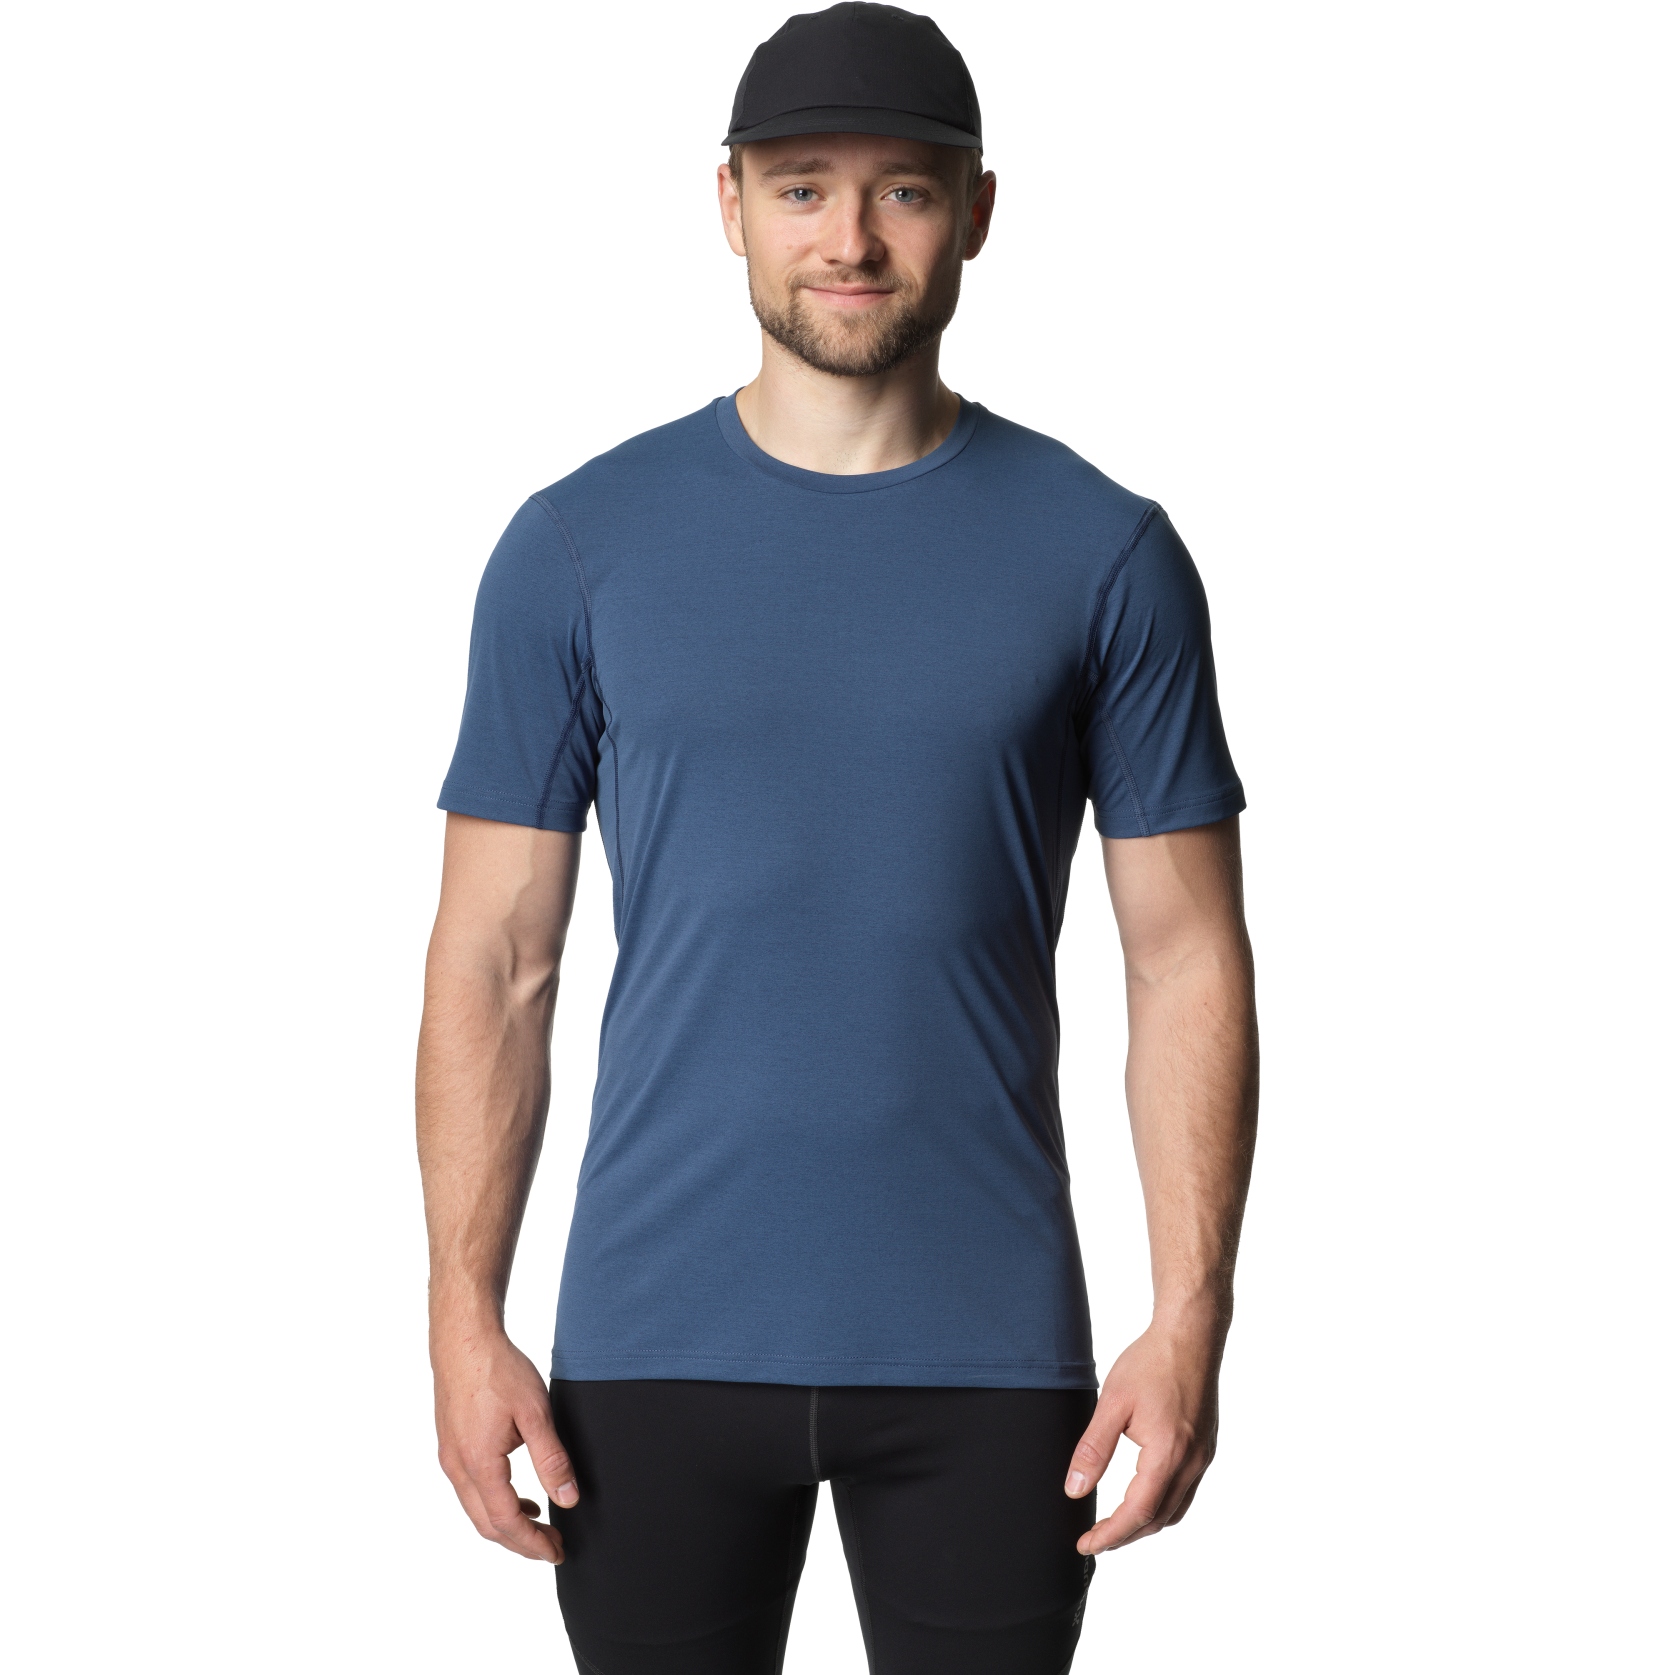 Productfoto van Houdini Pace Air T-Shirt Heren - Summit Blue